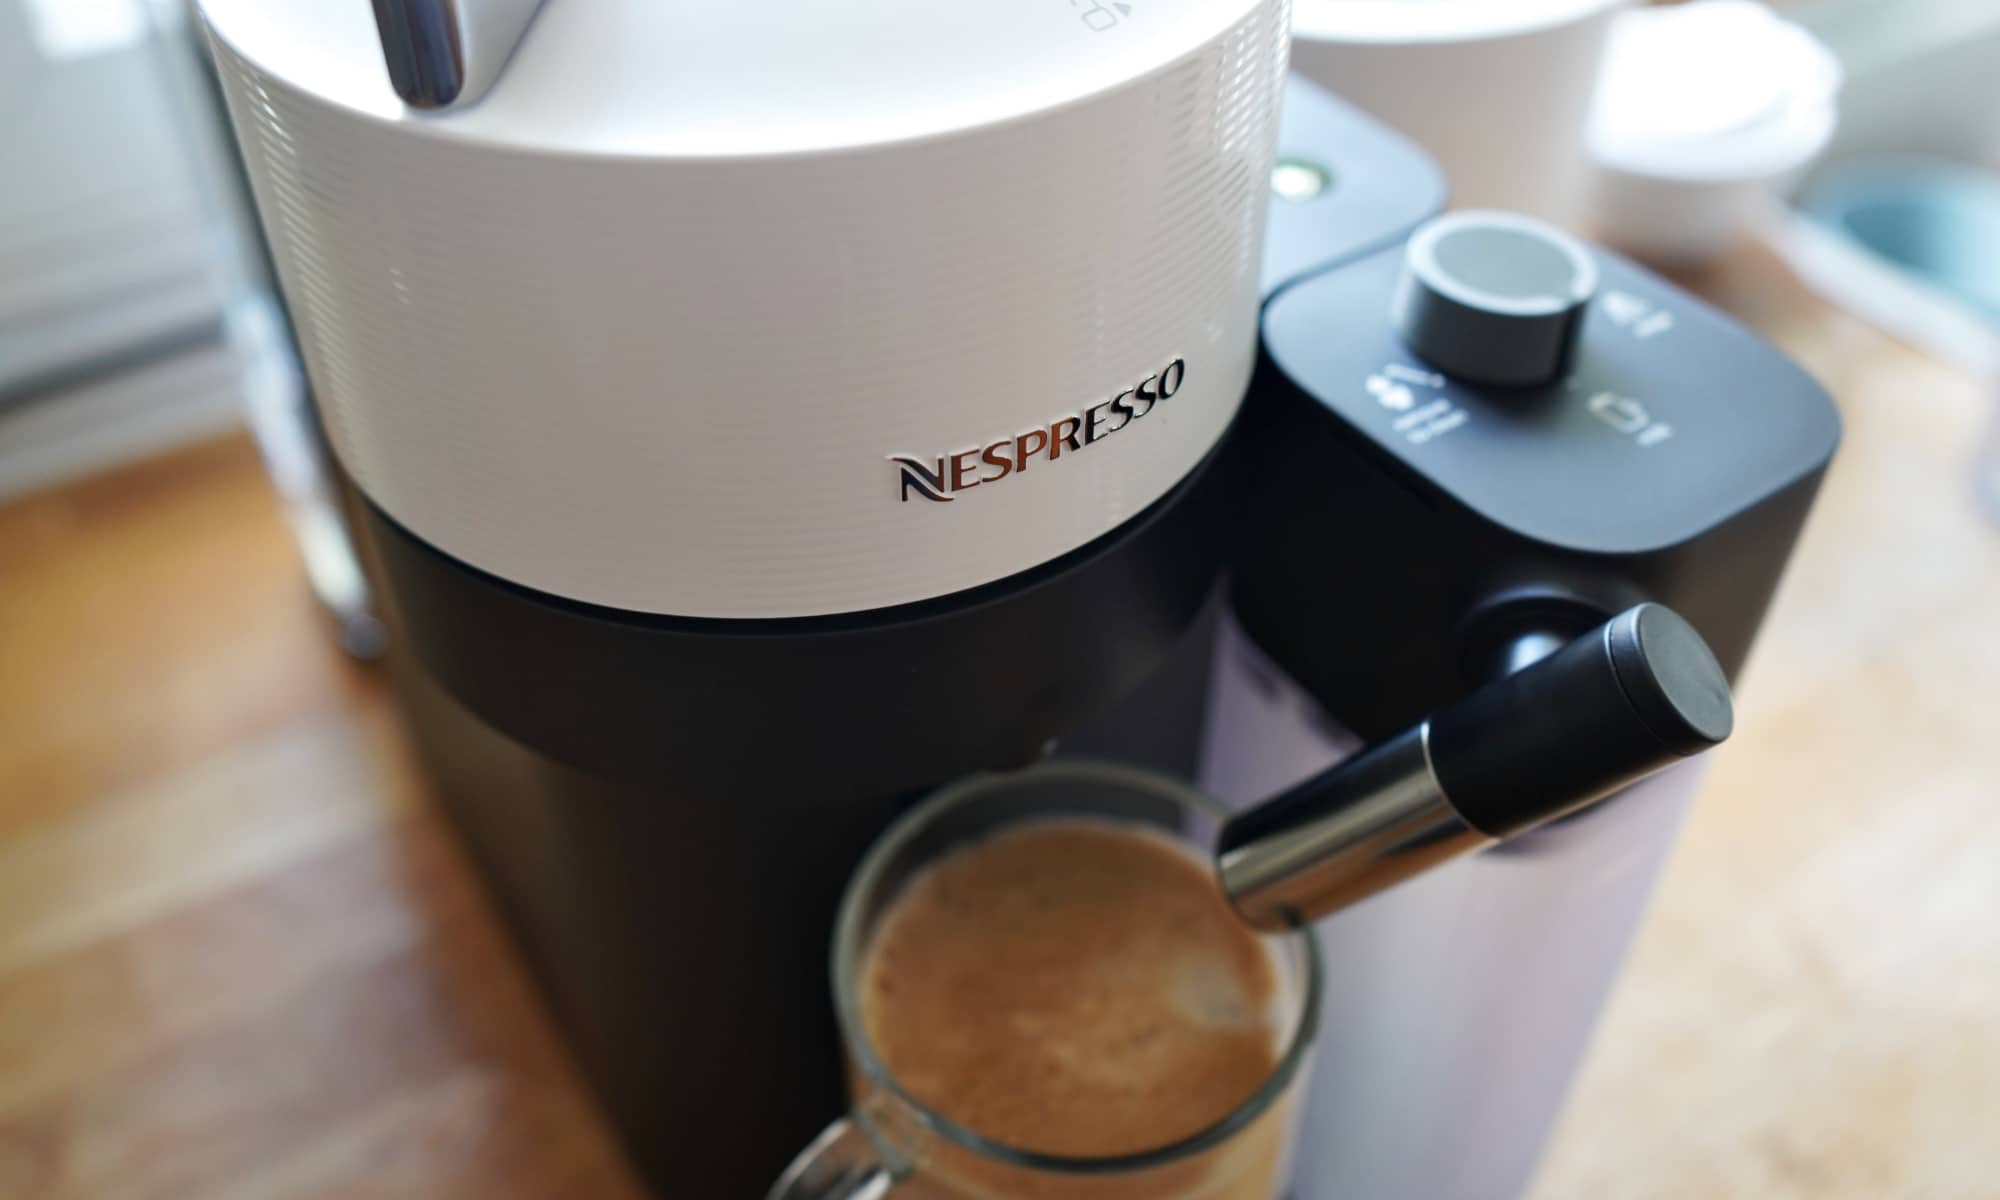 Nespresso Atelier KRUPS  Machine with Milk Frother